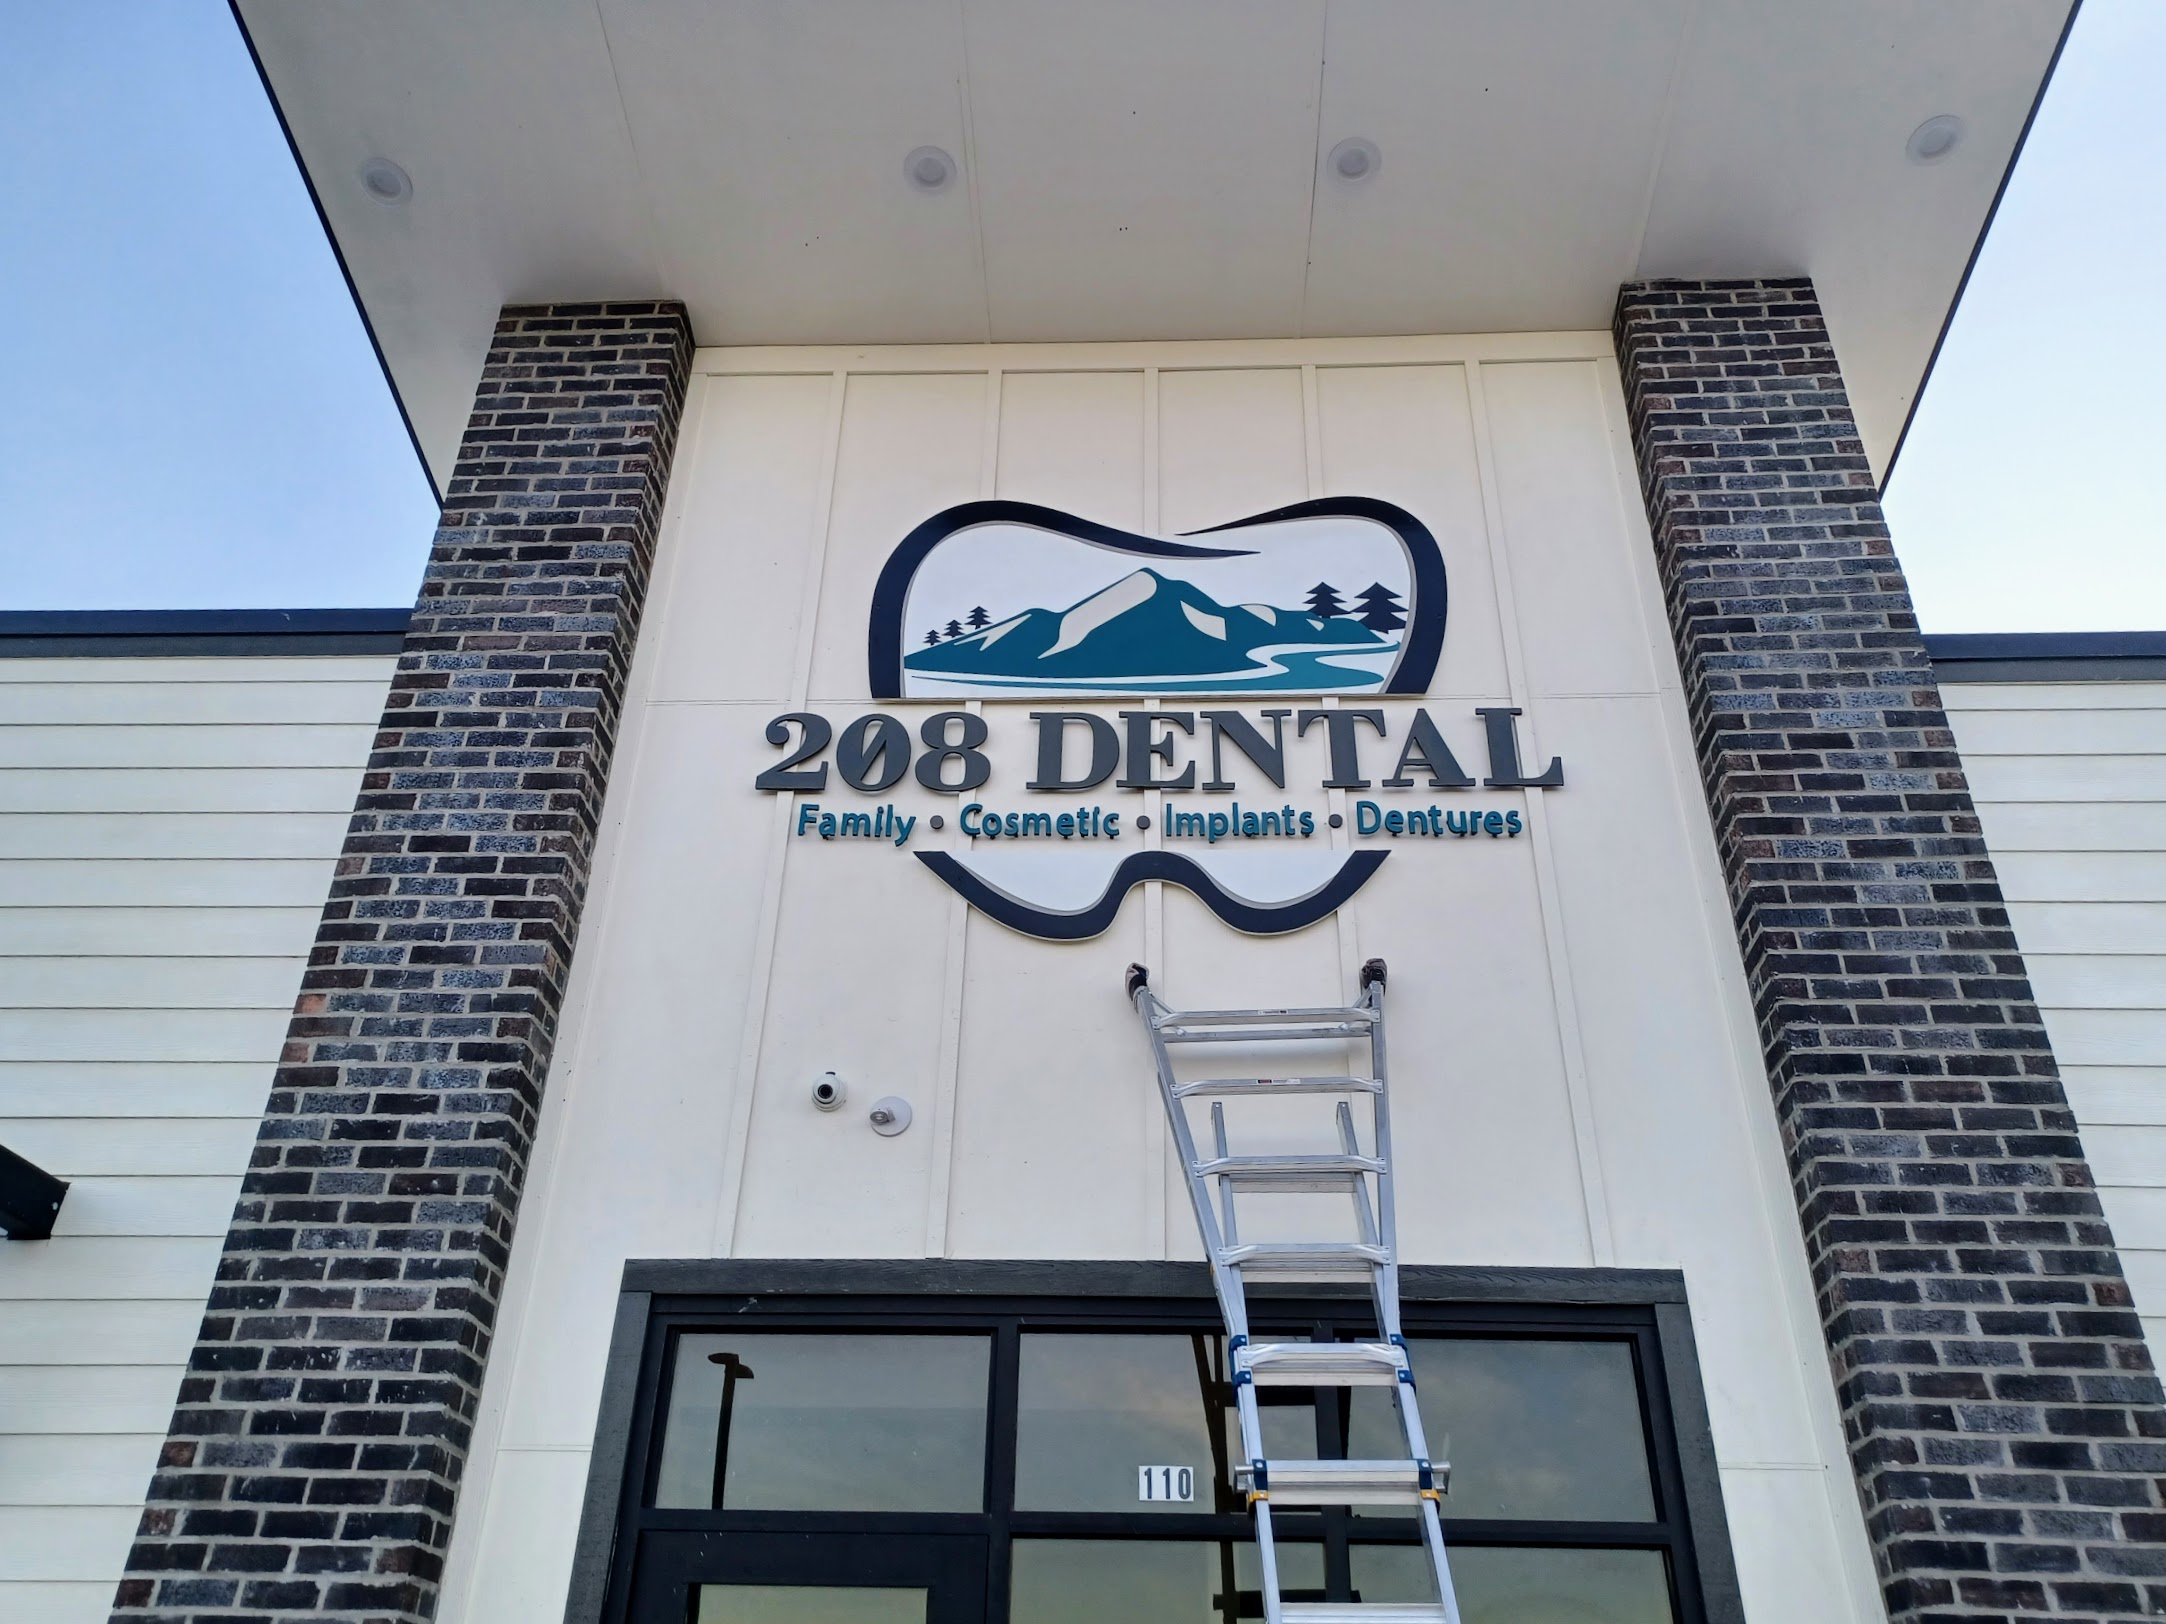 208 Dental Exterior Sign